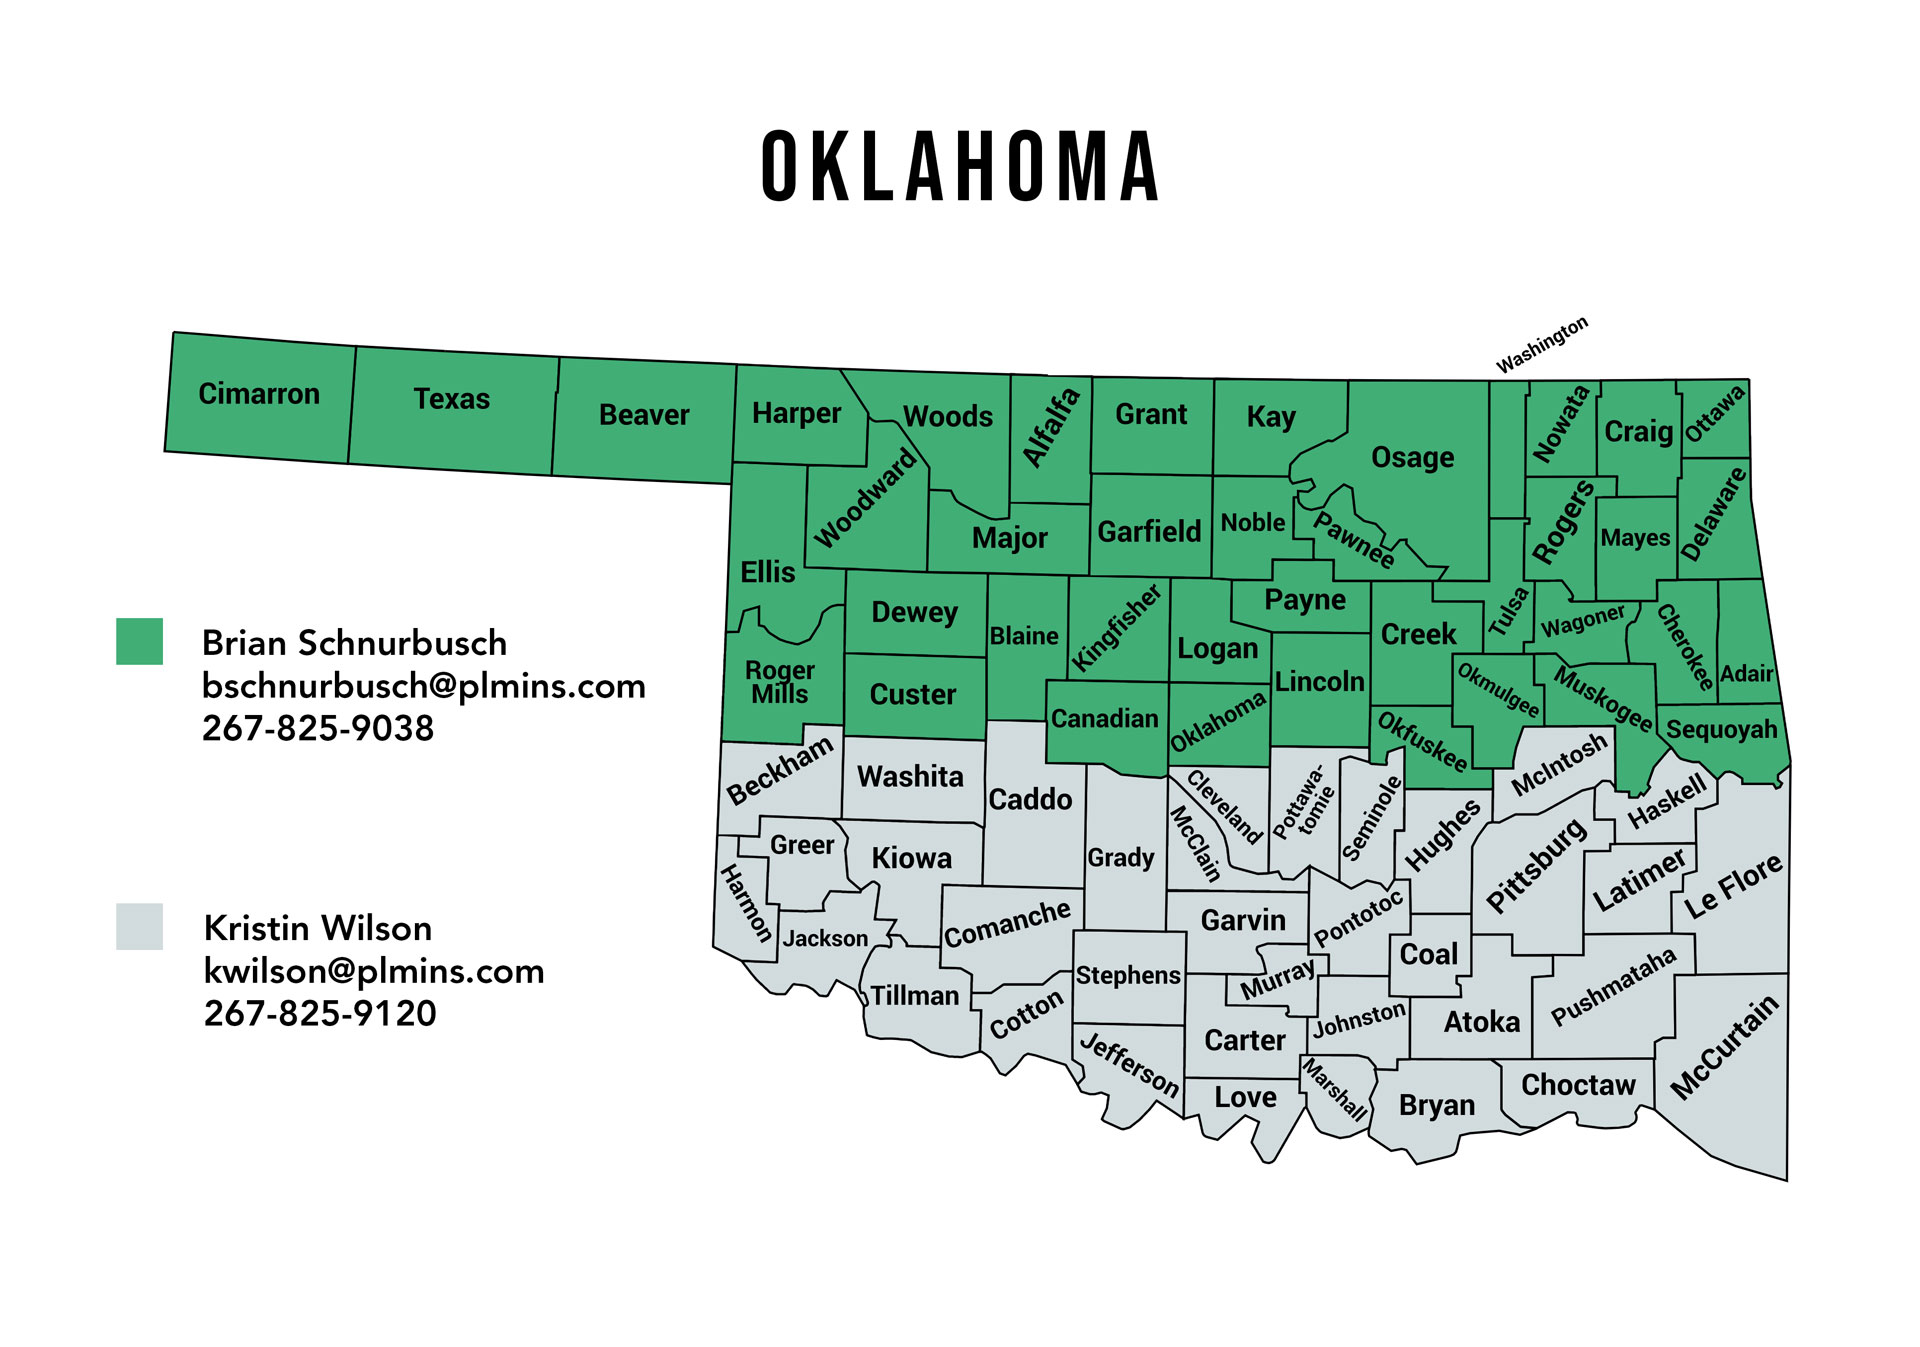 Oklahoma Wood Insurance